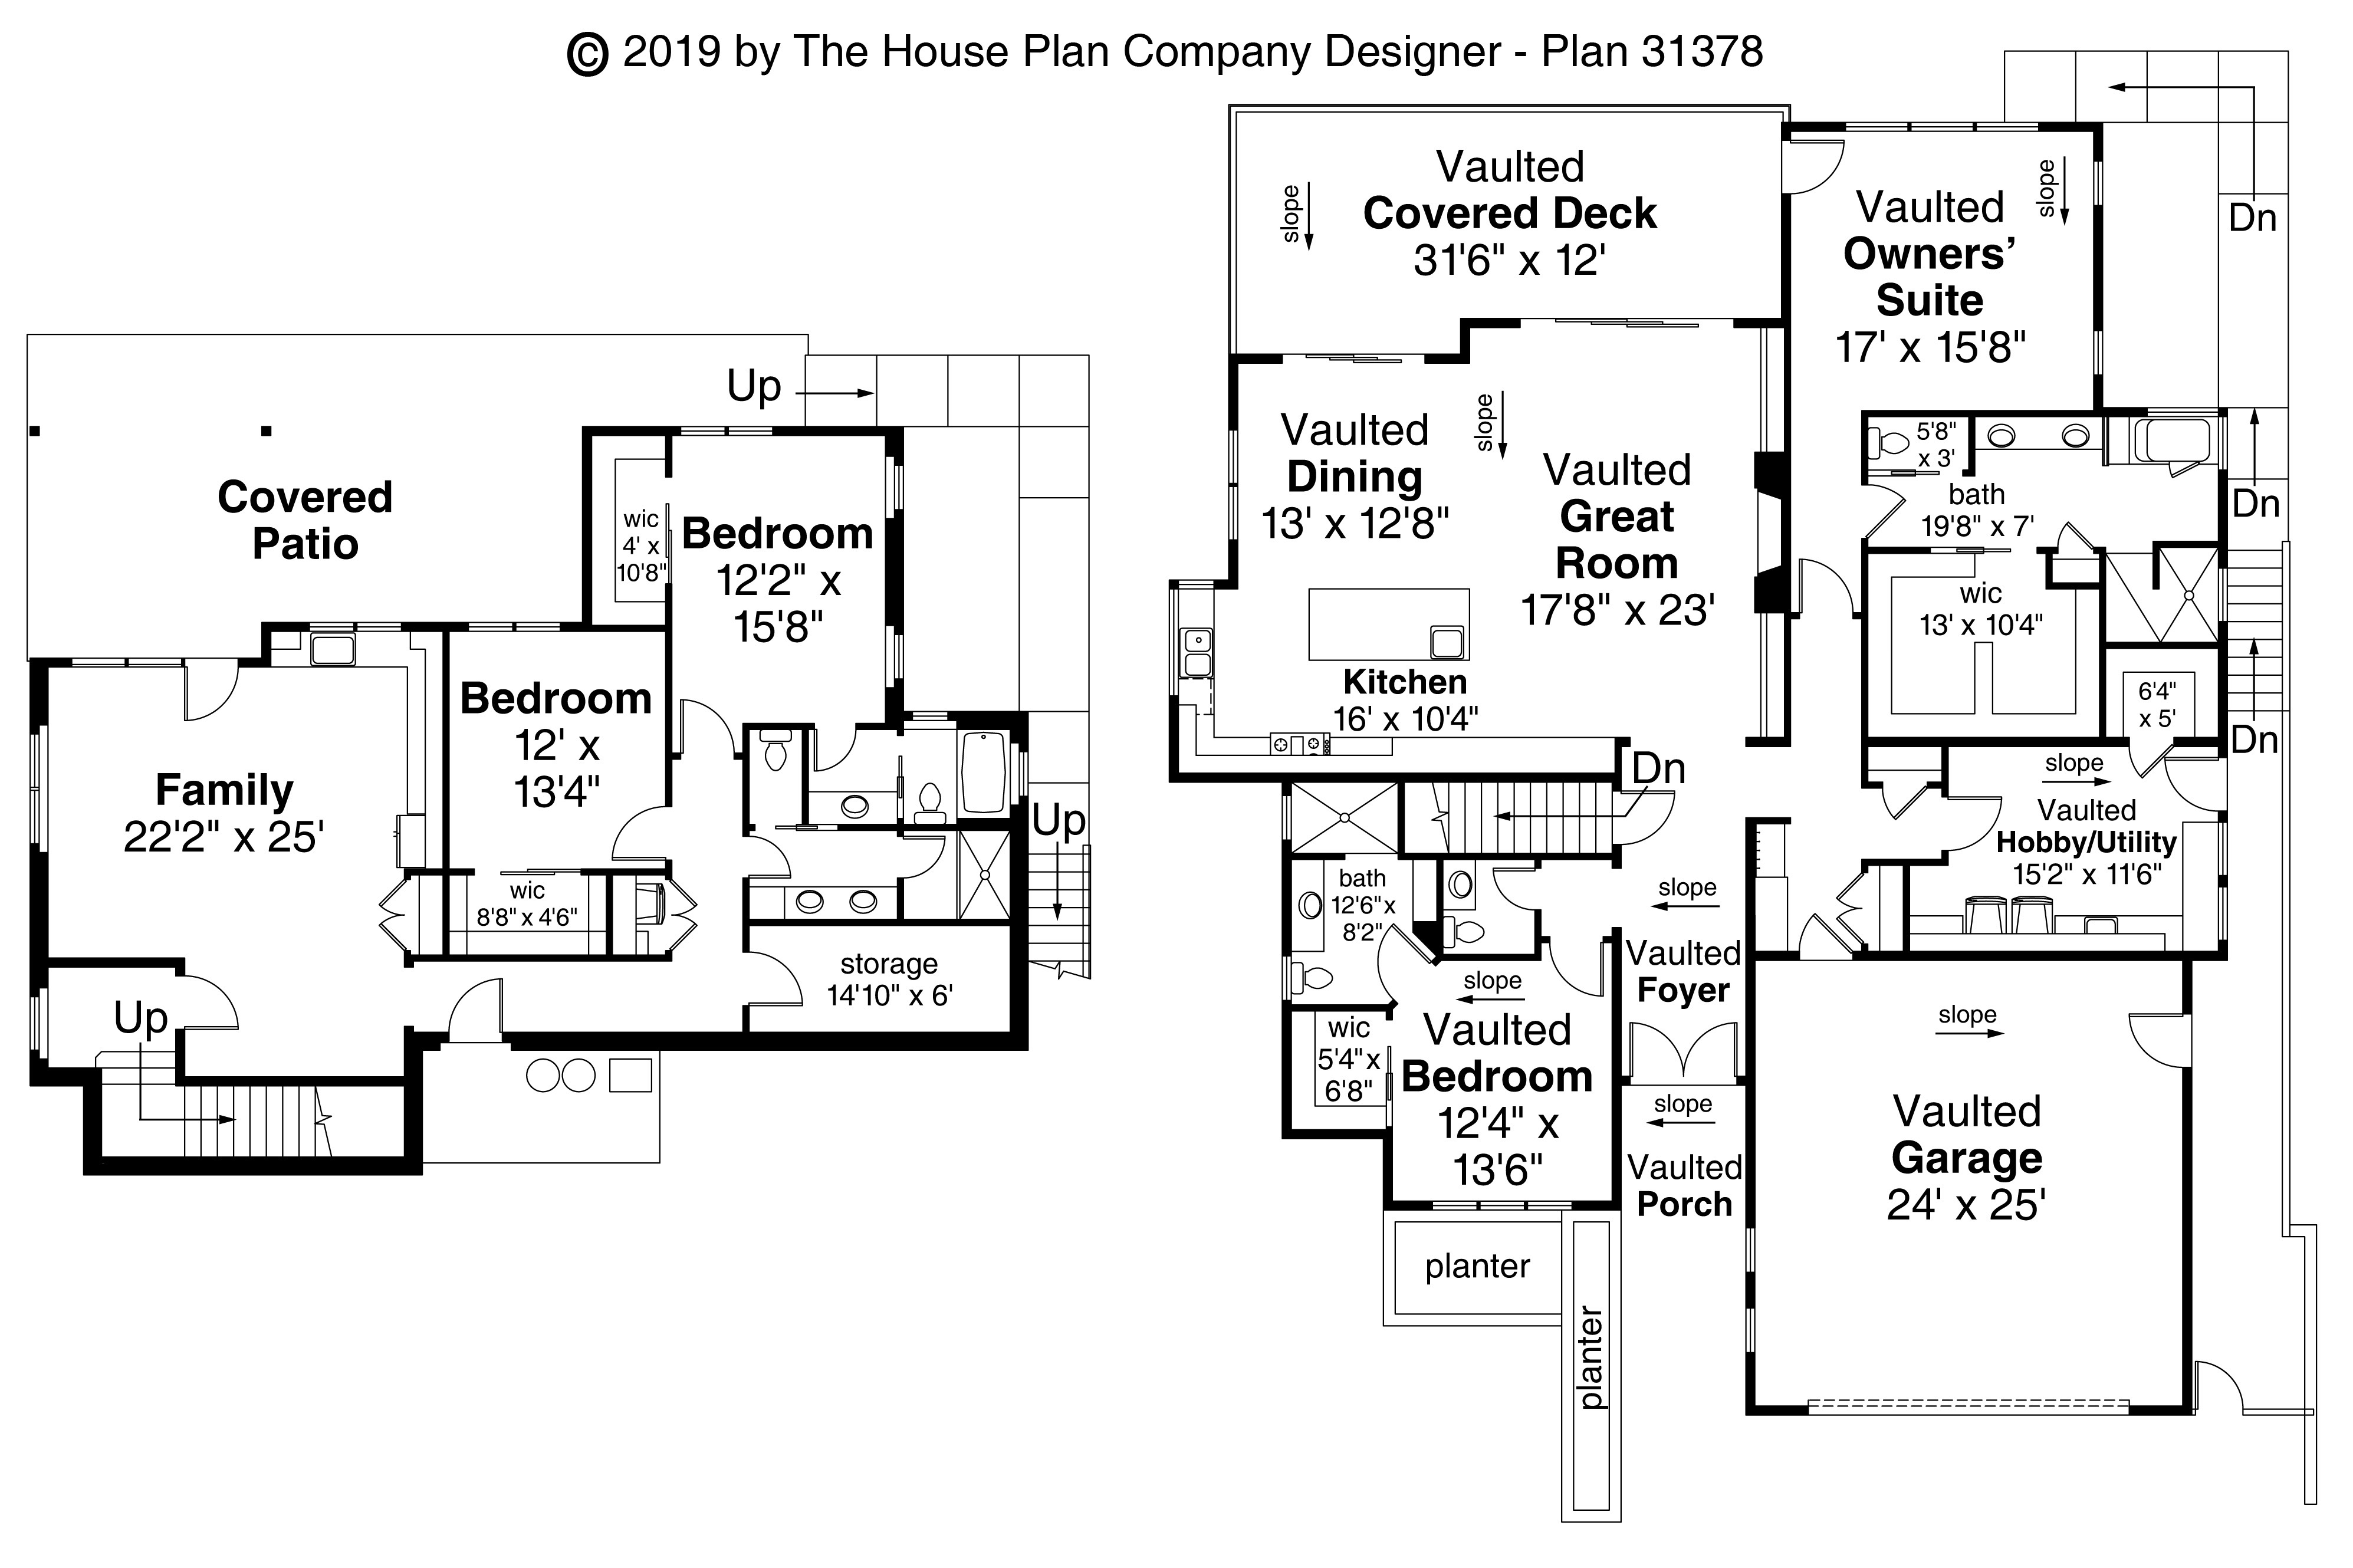 2 story mansion blueprints